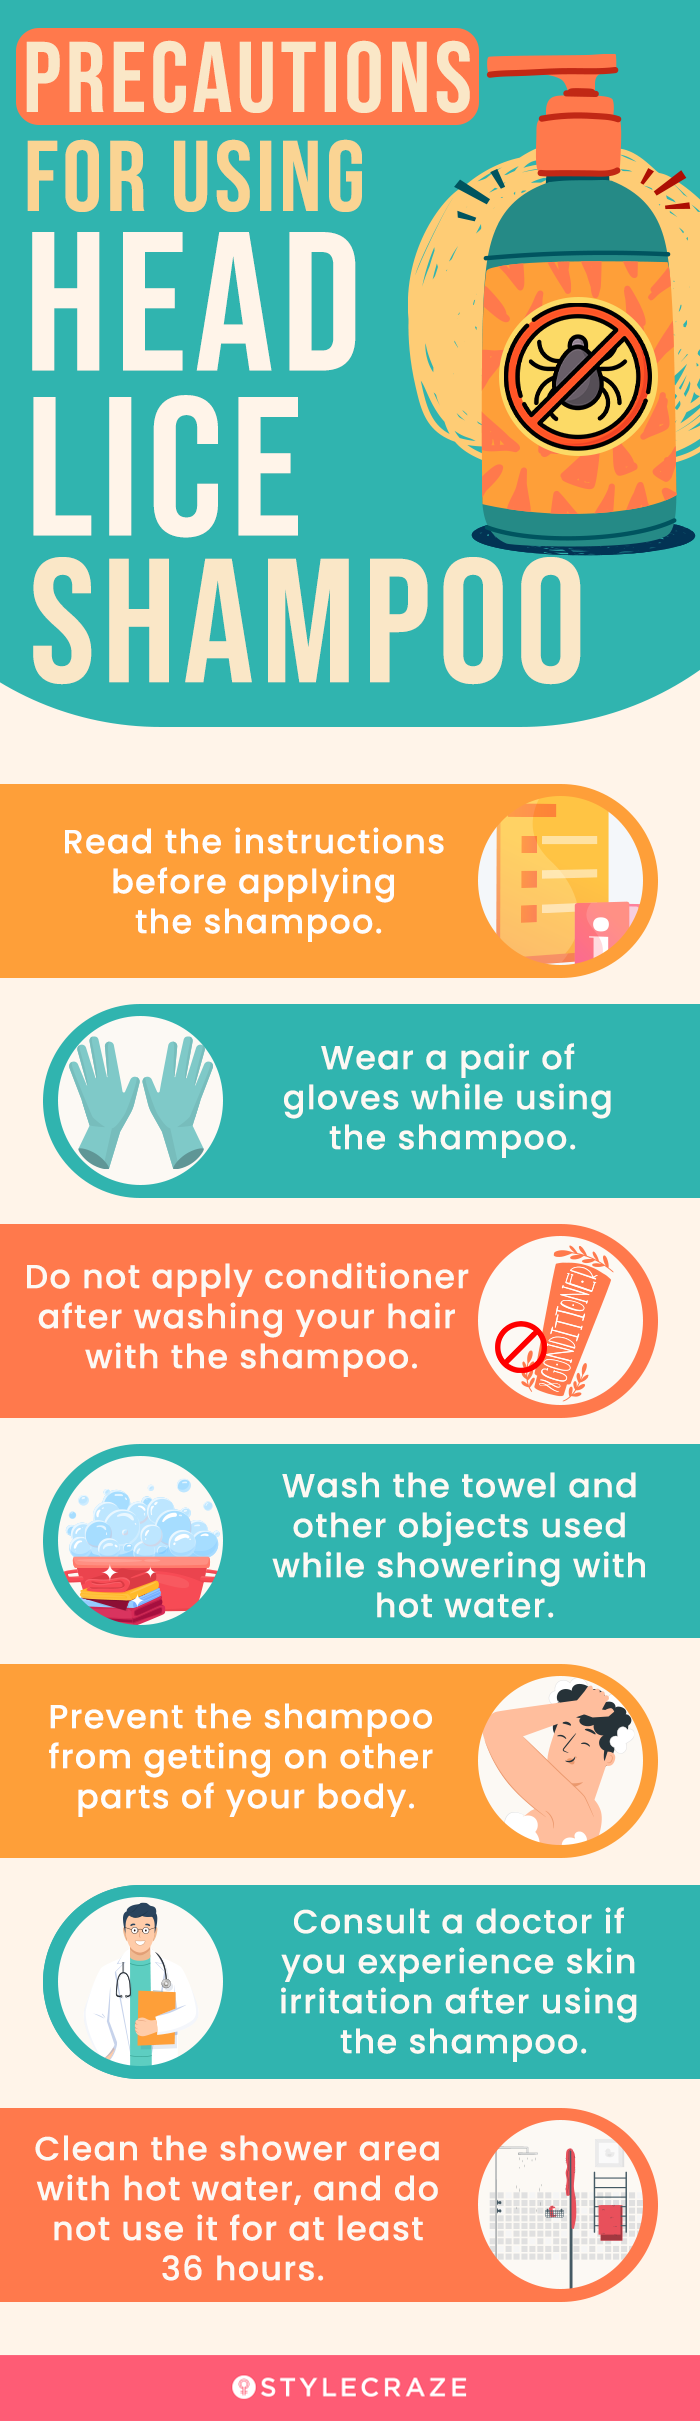 precautions for using head lice shampoo [infographic]